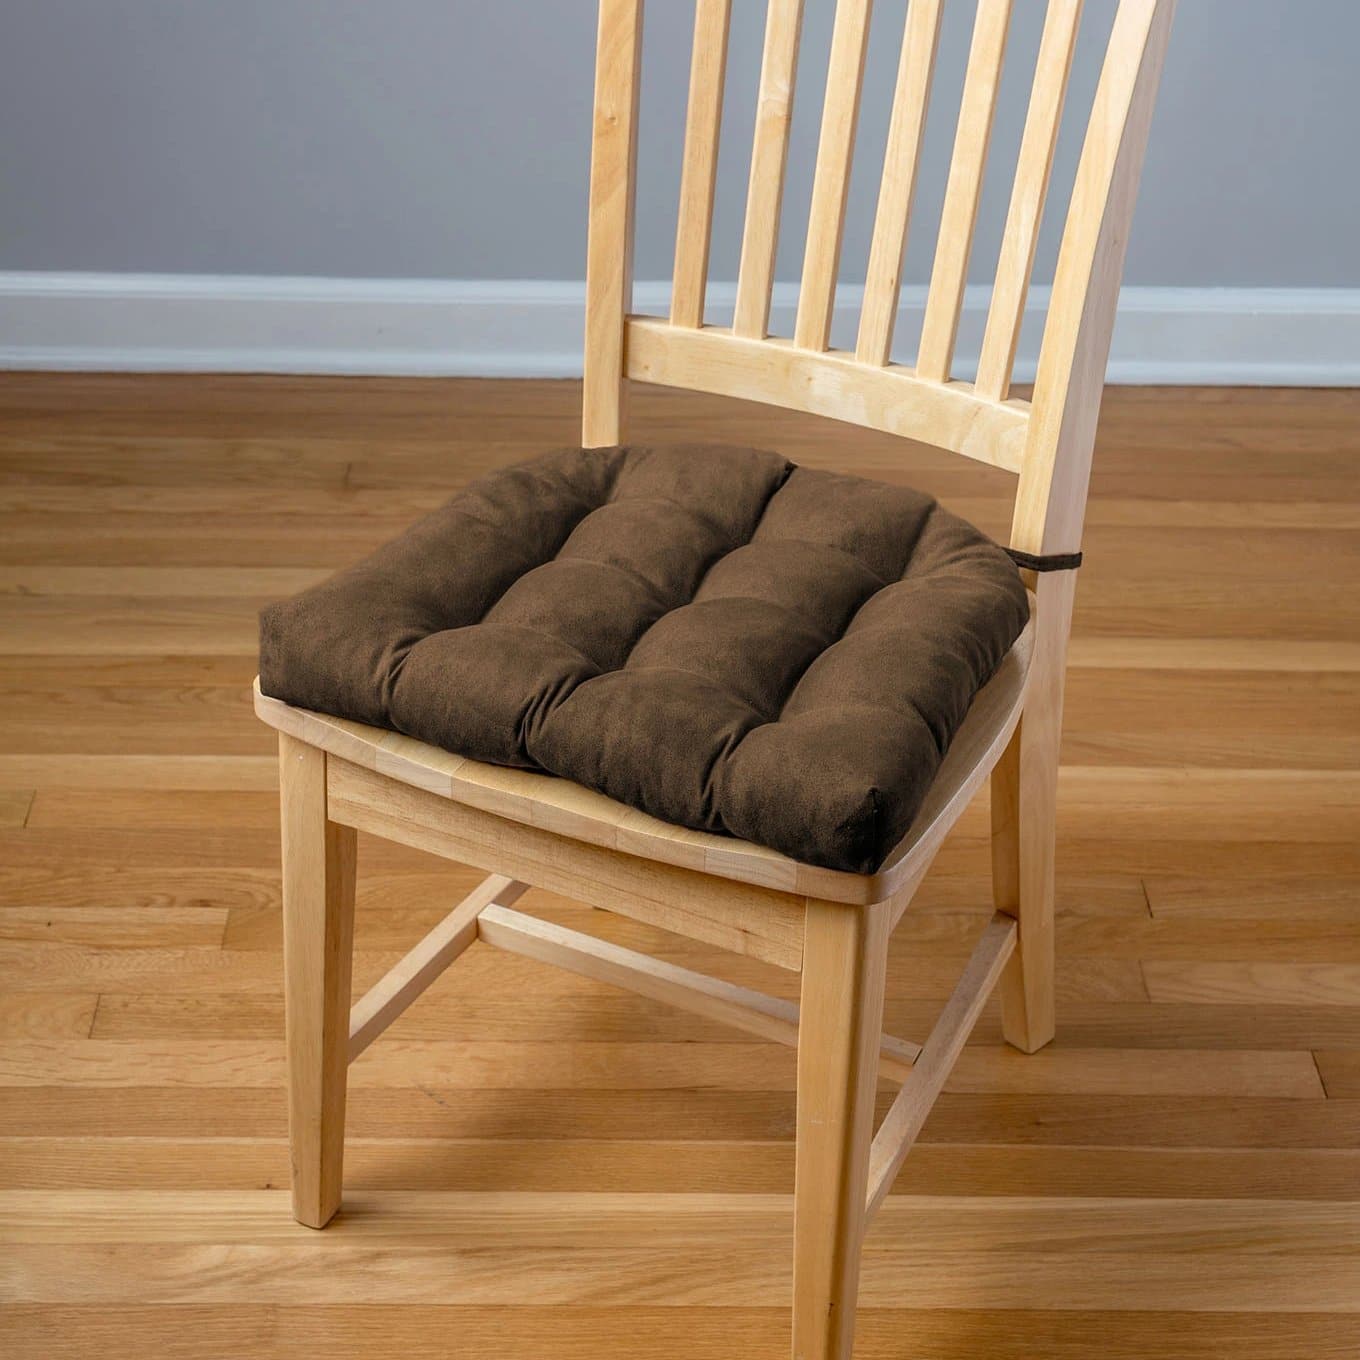 Micro-Suede Coffee Bean Brown Dining Chair Pad with Ties - Latex Foam Fill  - Microfiber